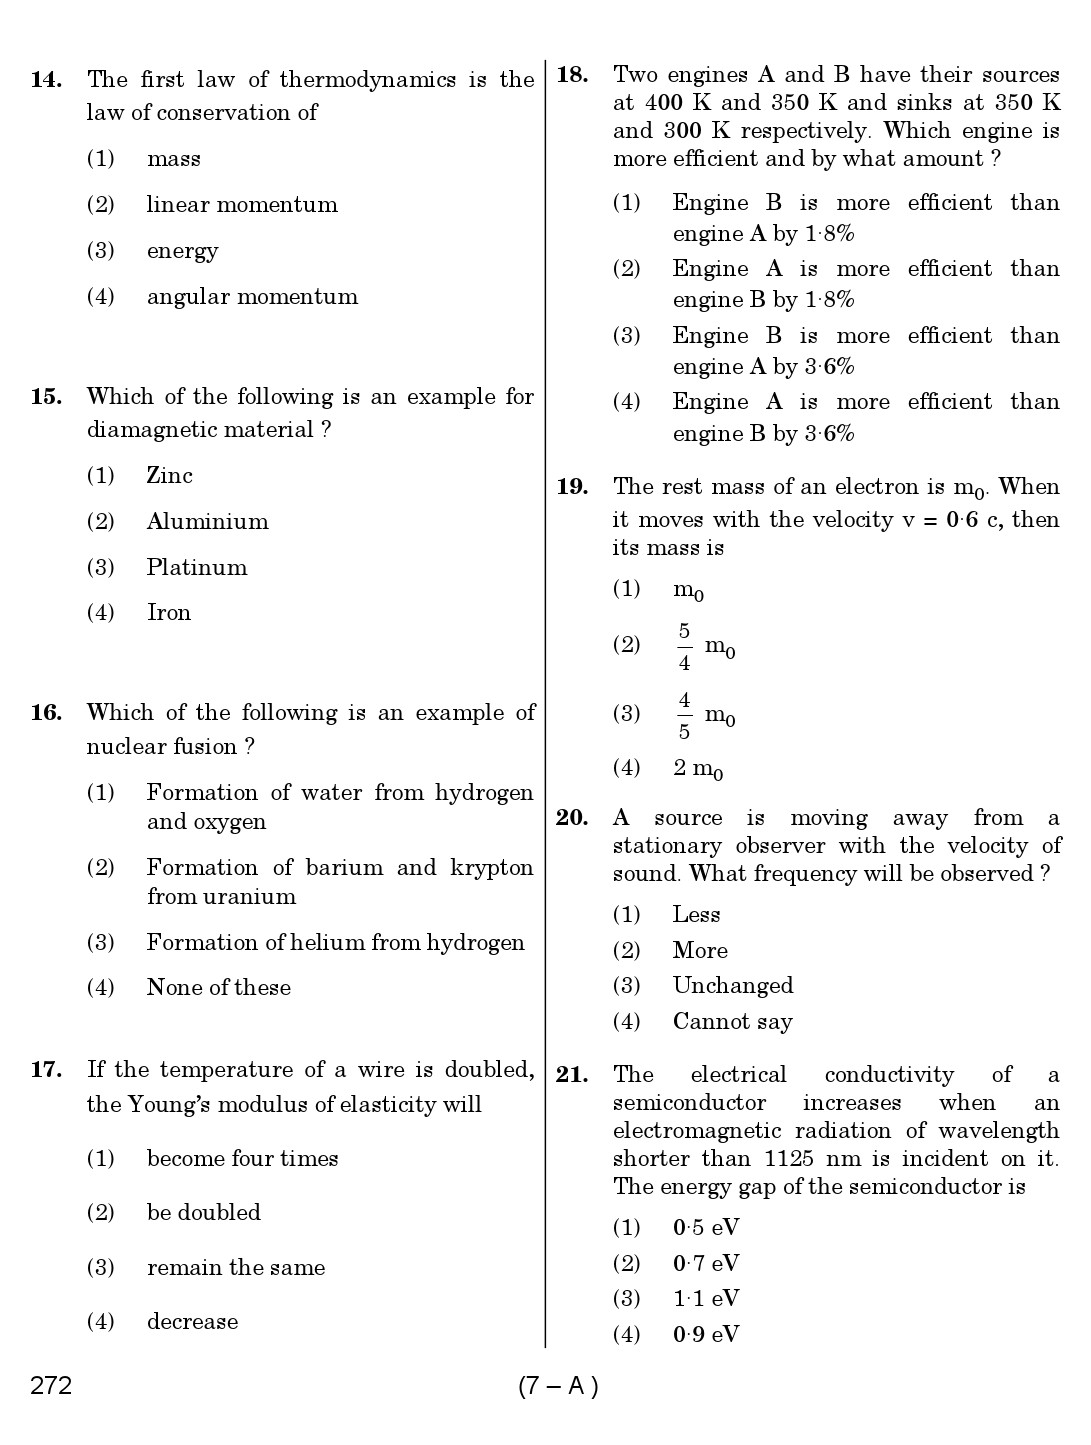 Karnataka PSC Mathematics Teacher Exam Sample Question Paper Subject code 272 7